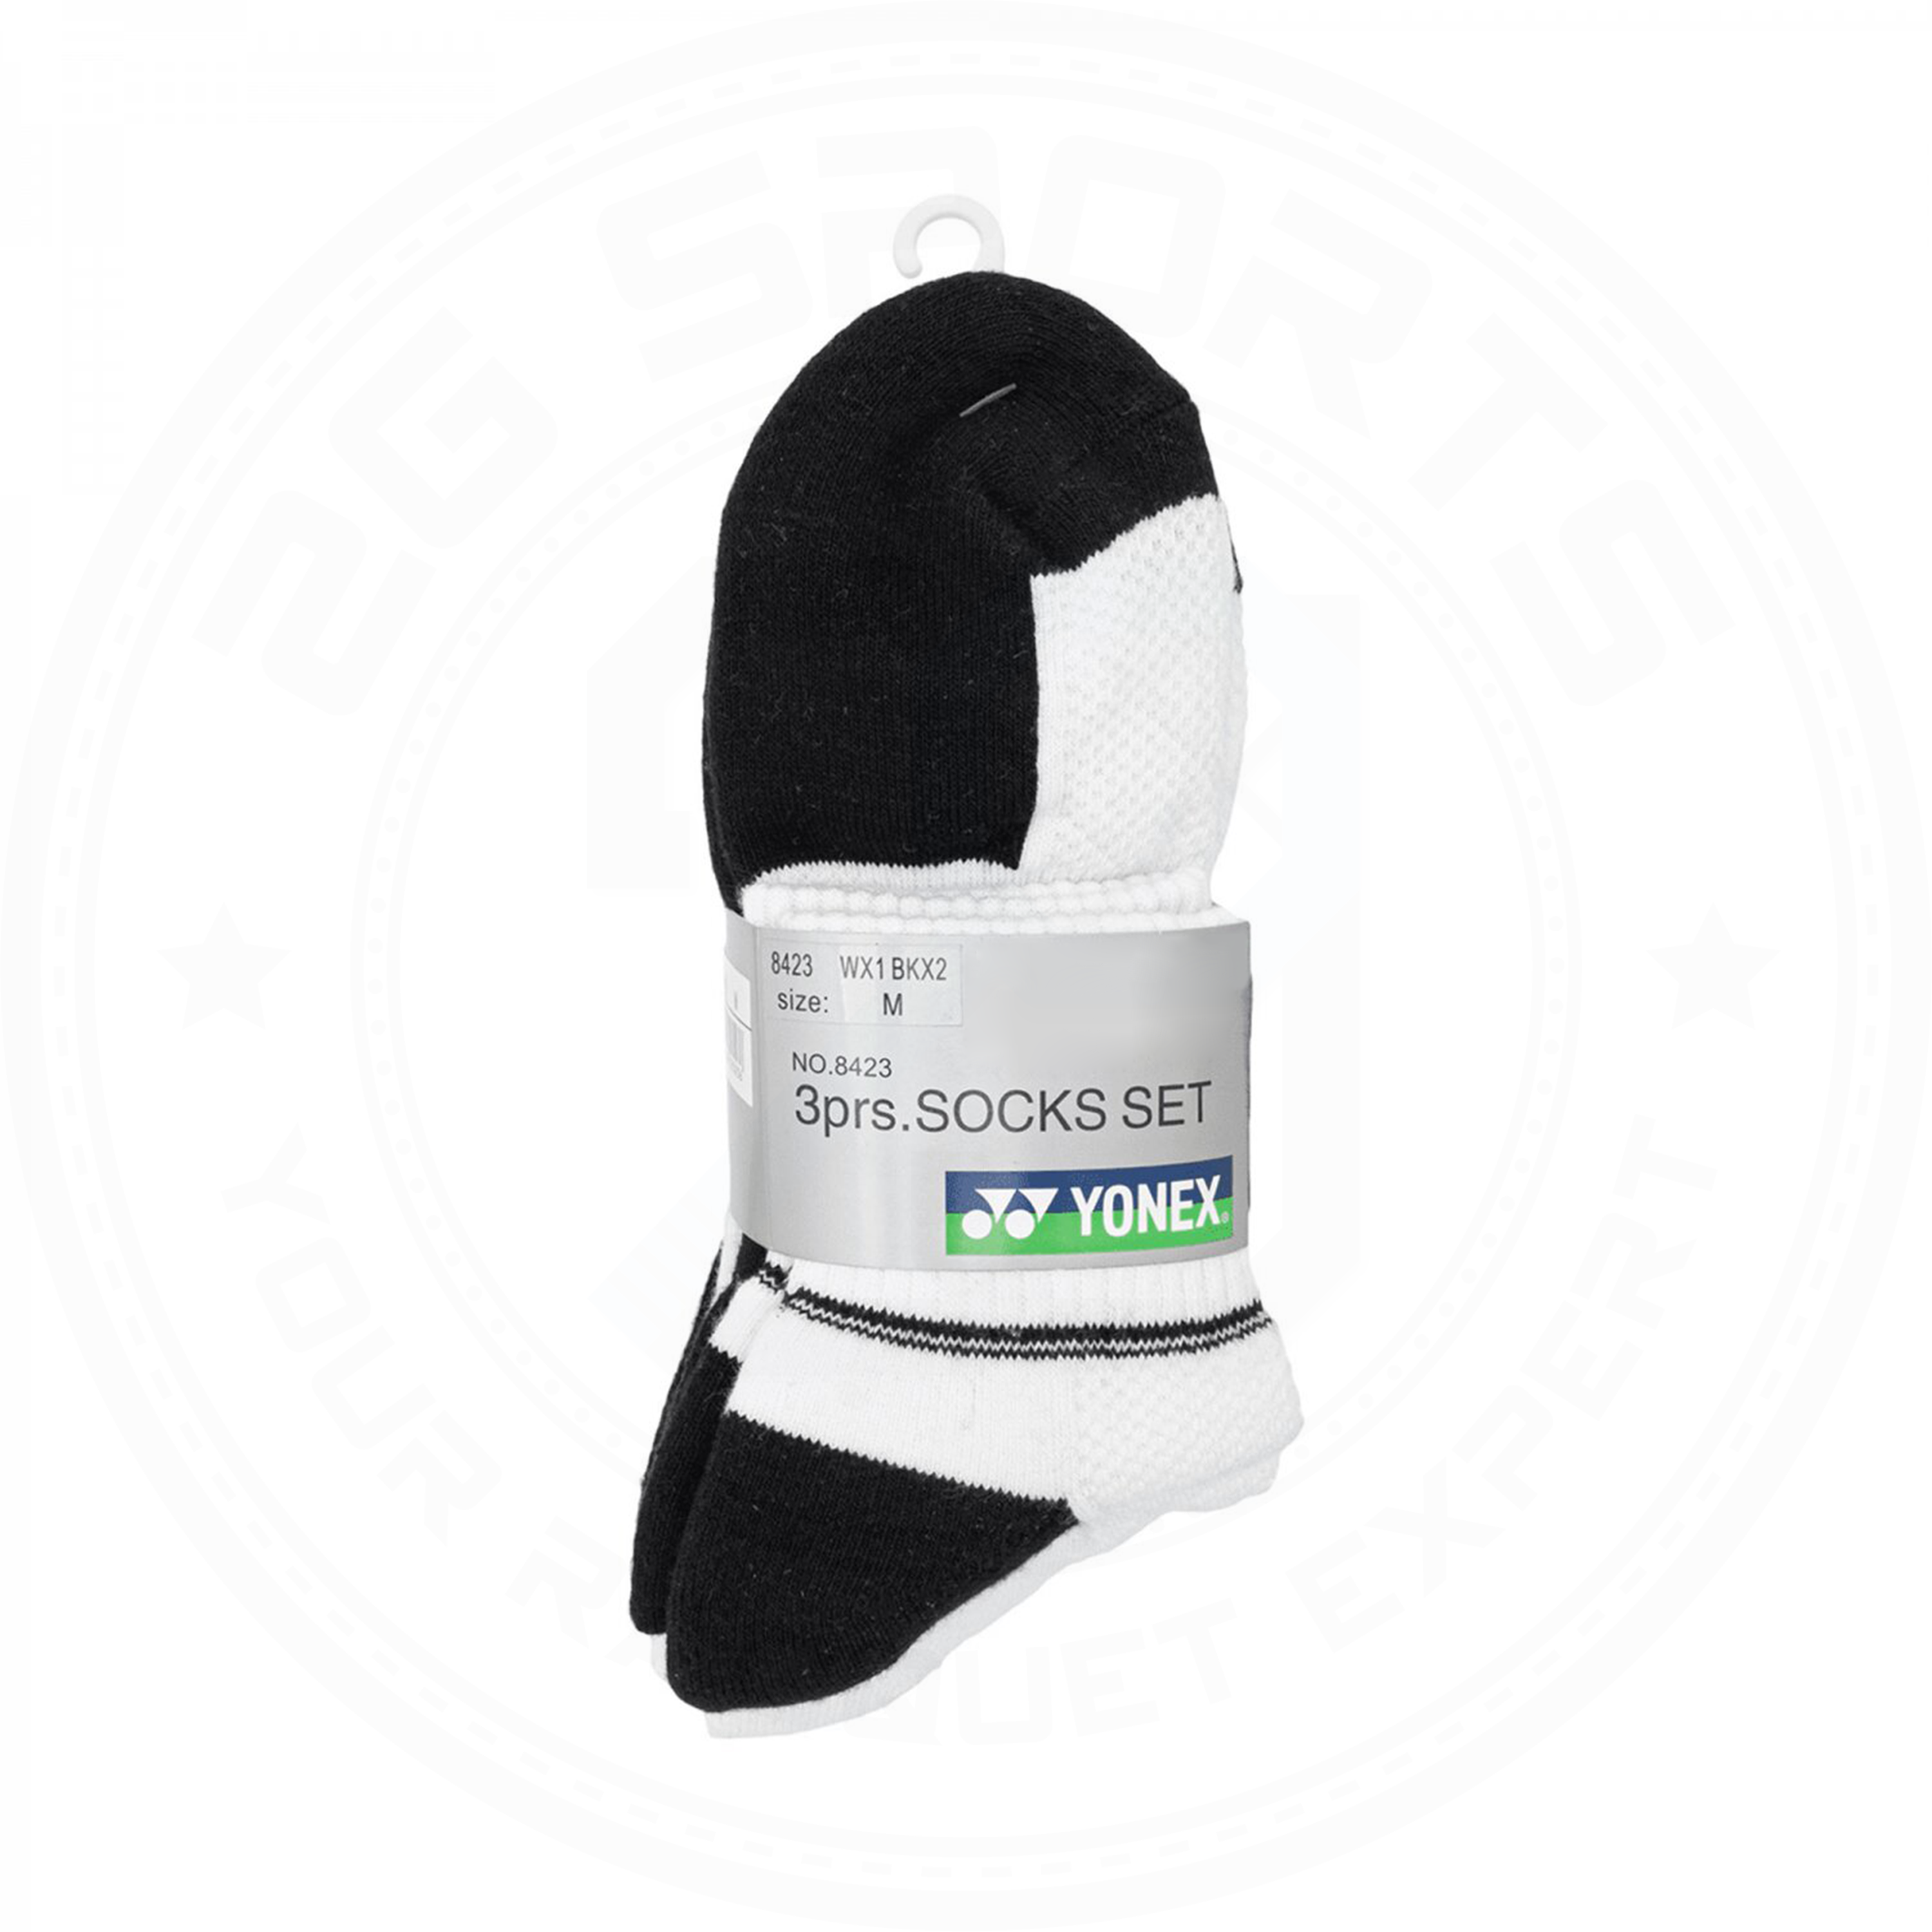 Yonex Quarter Sports Socks 8423 3pairs Socks Set